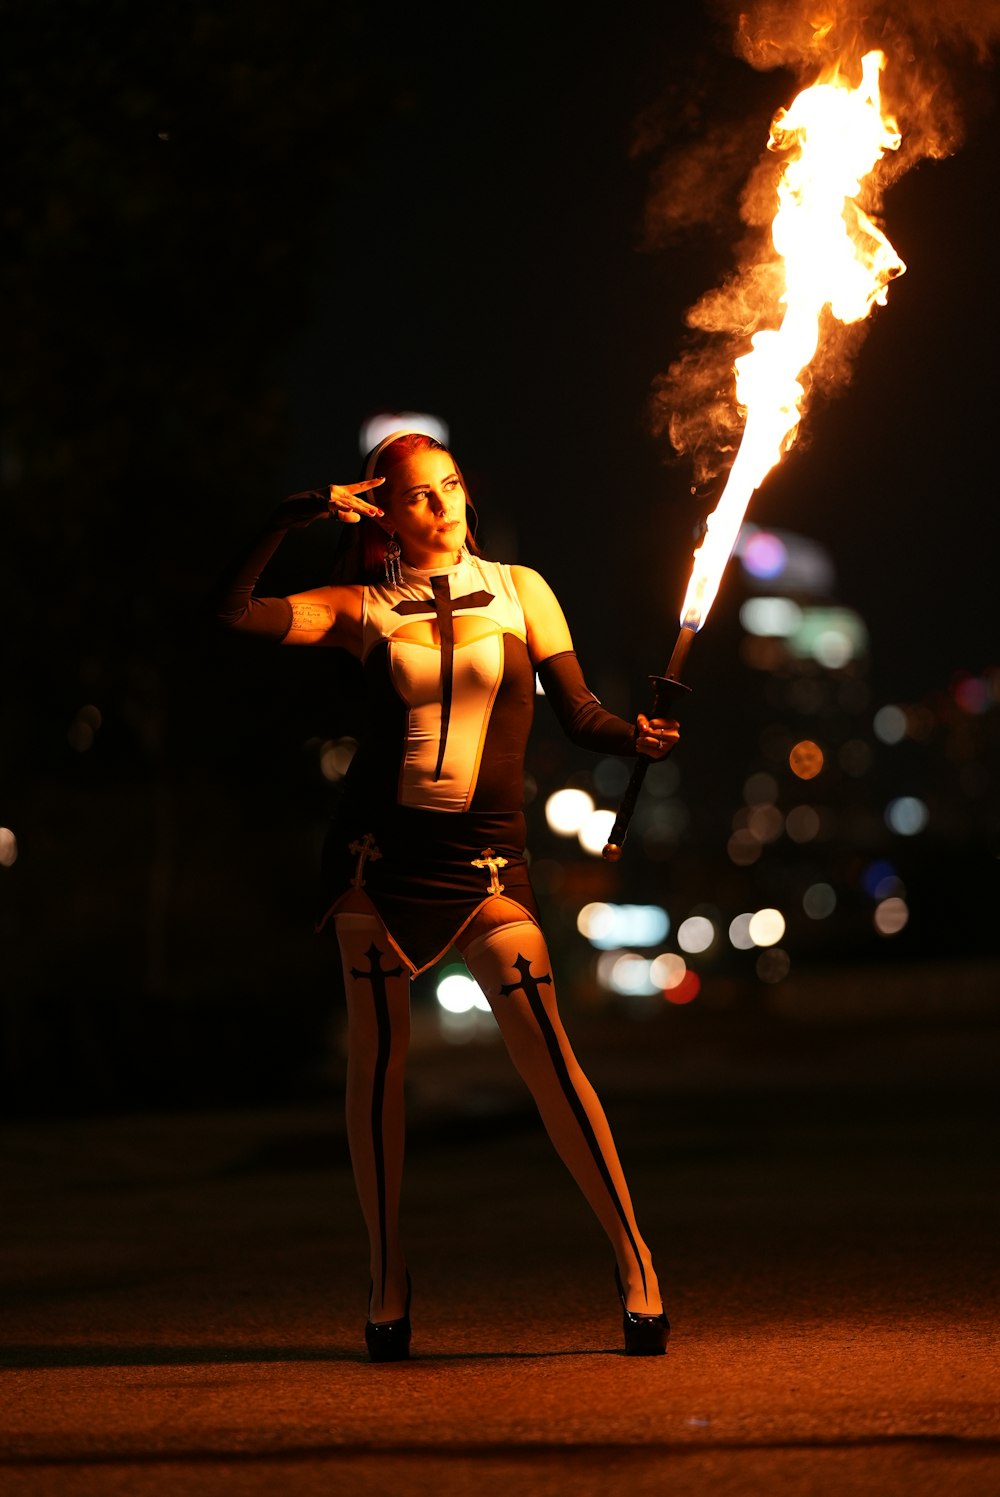 a woman holding a fire stick on a street